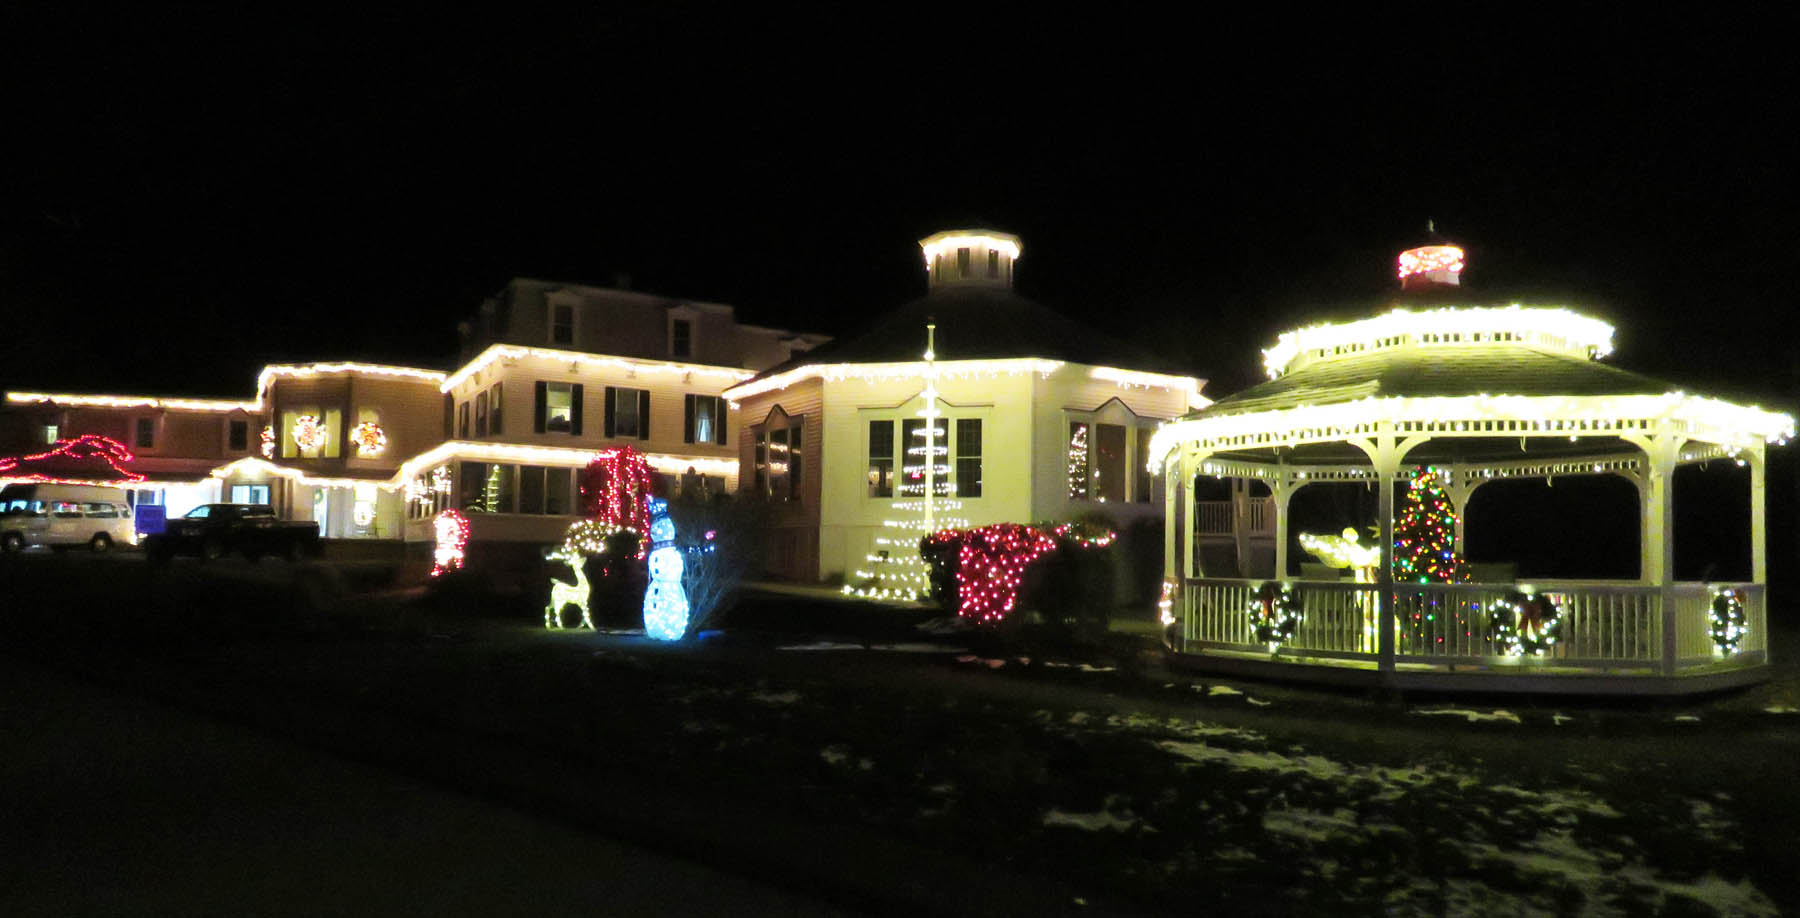 Broadview Manor holiday lights